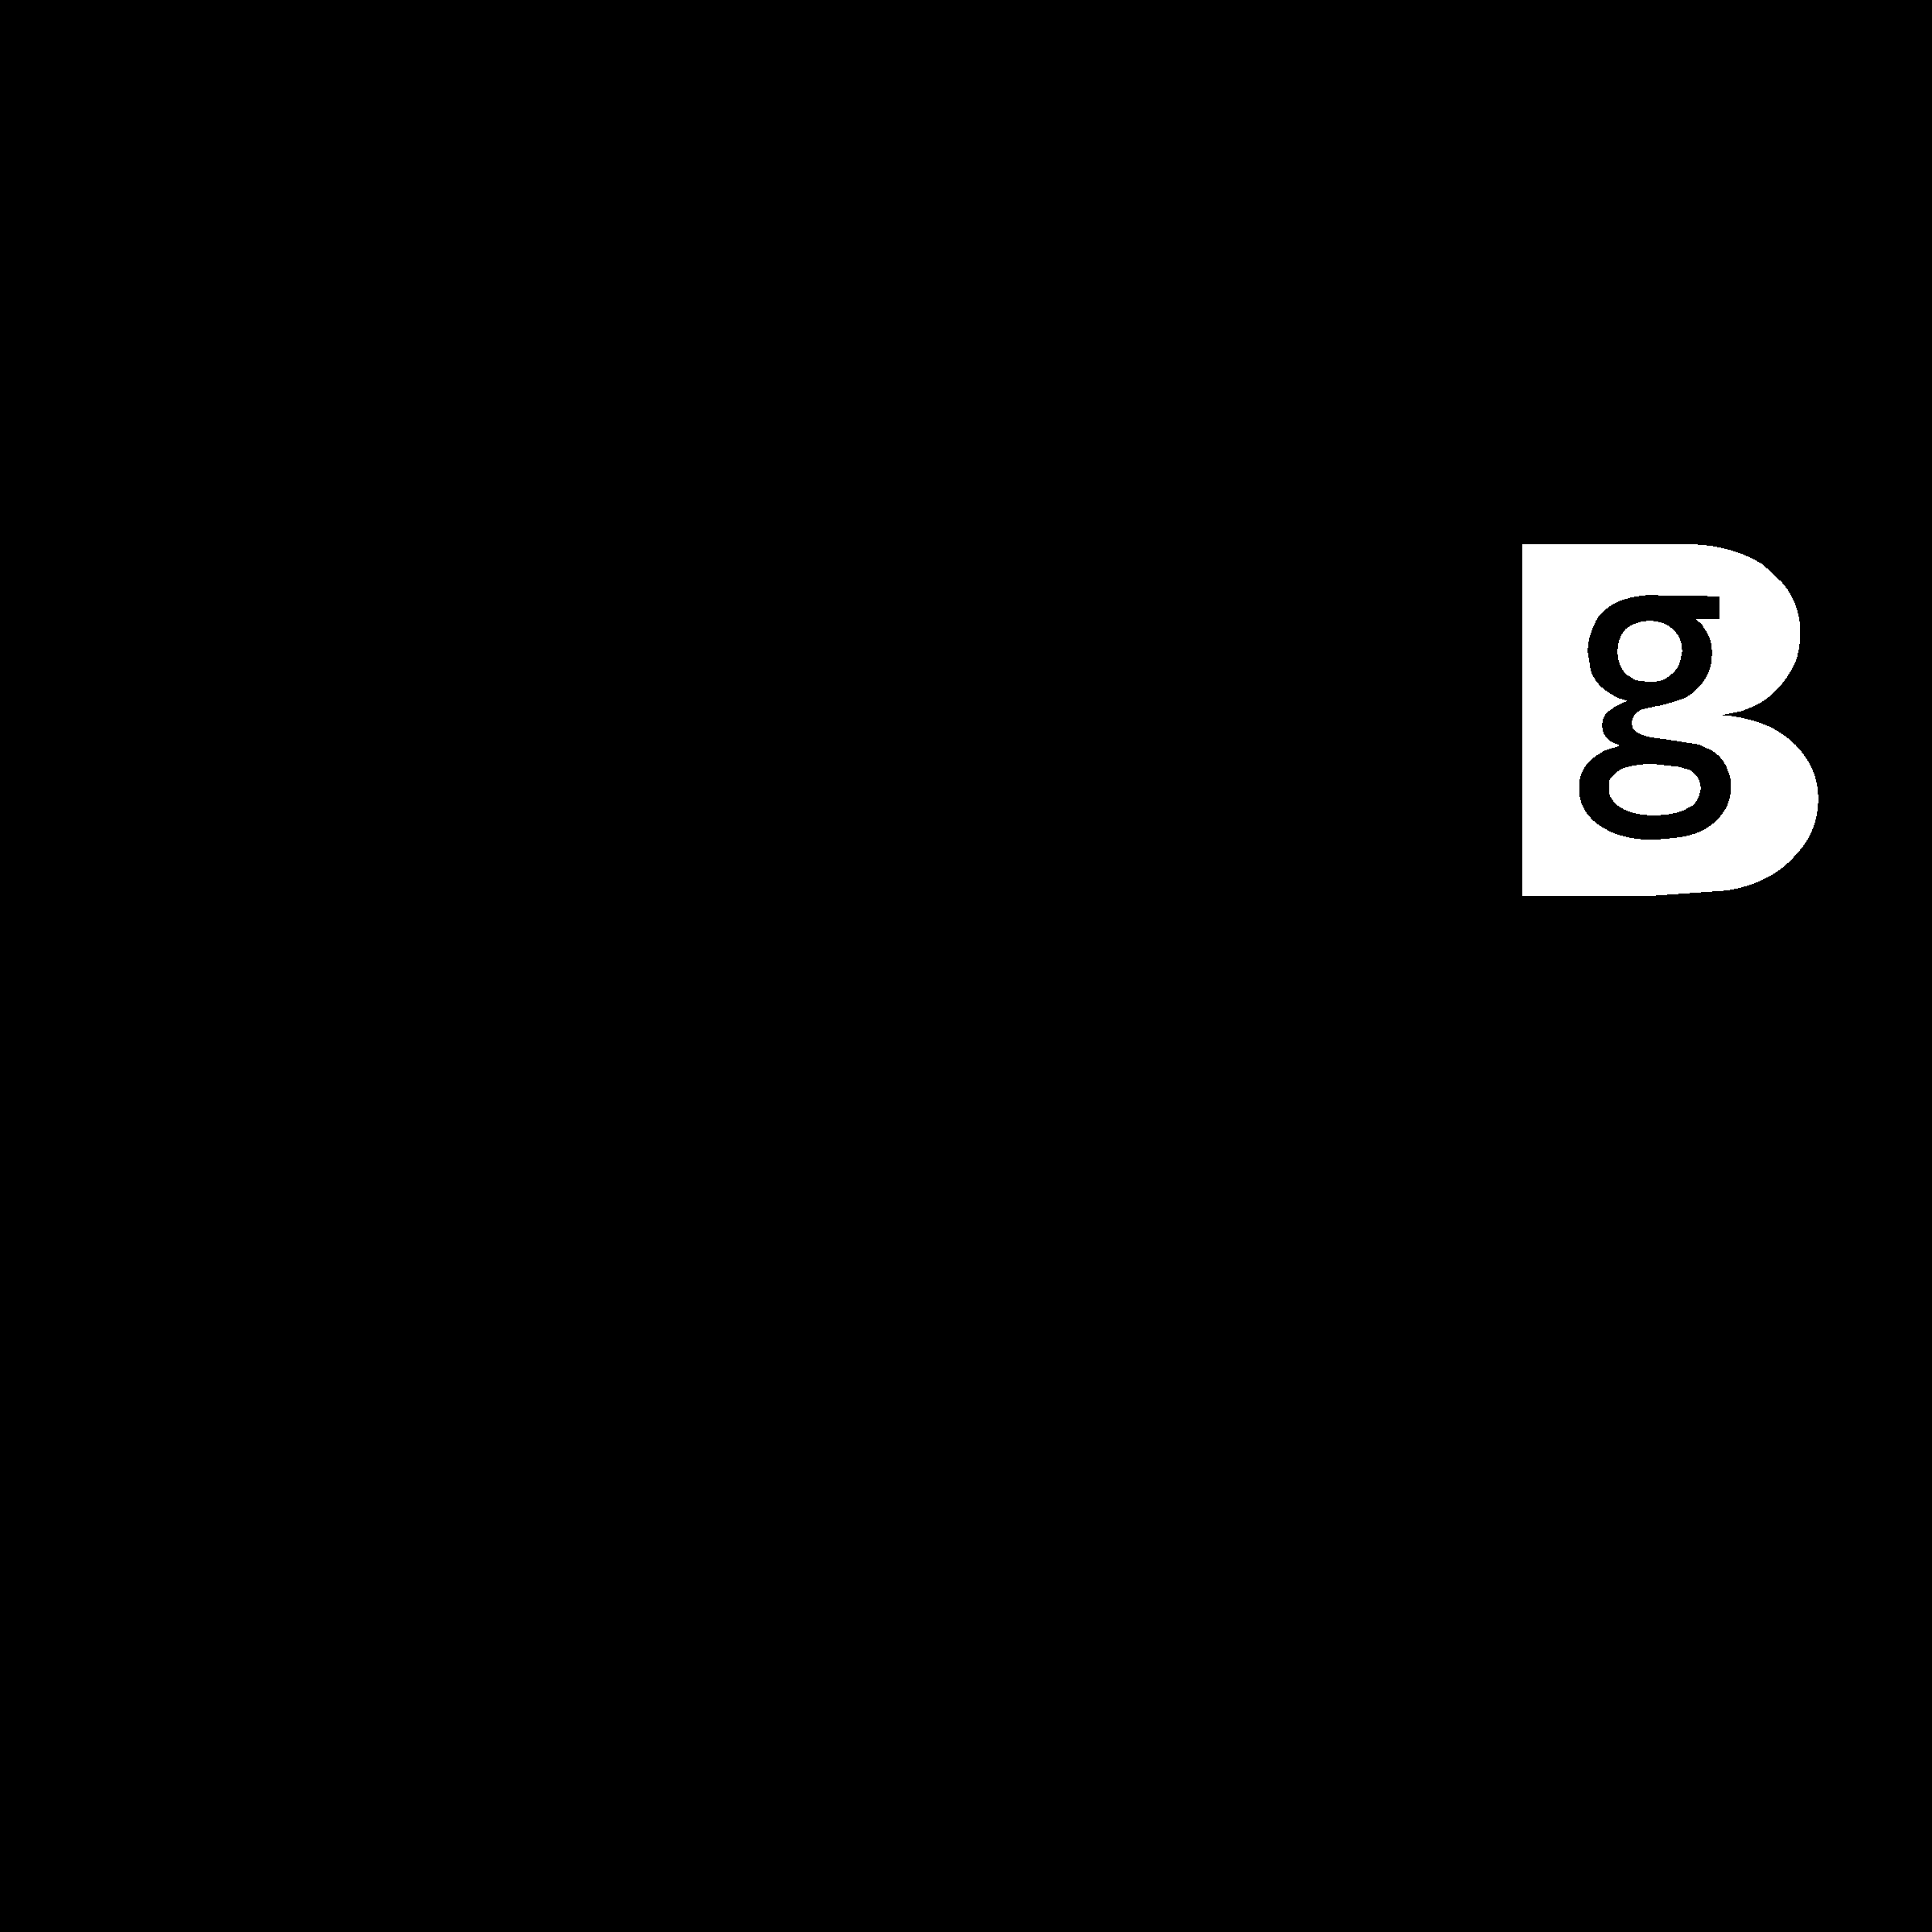 BG Group Logo - BG Group 01 Logo PNG Transparent & SVG Vector - Freebie Supply